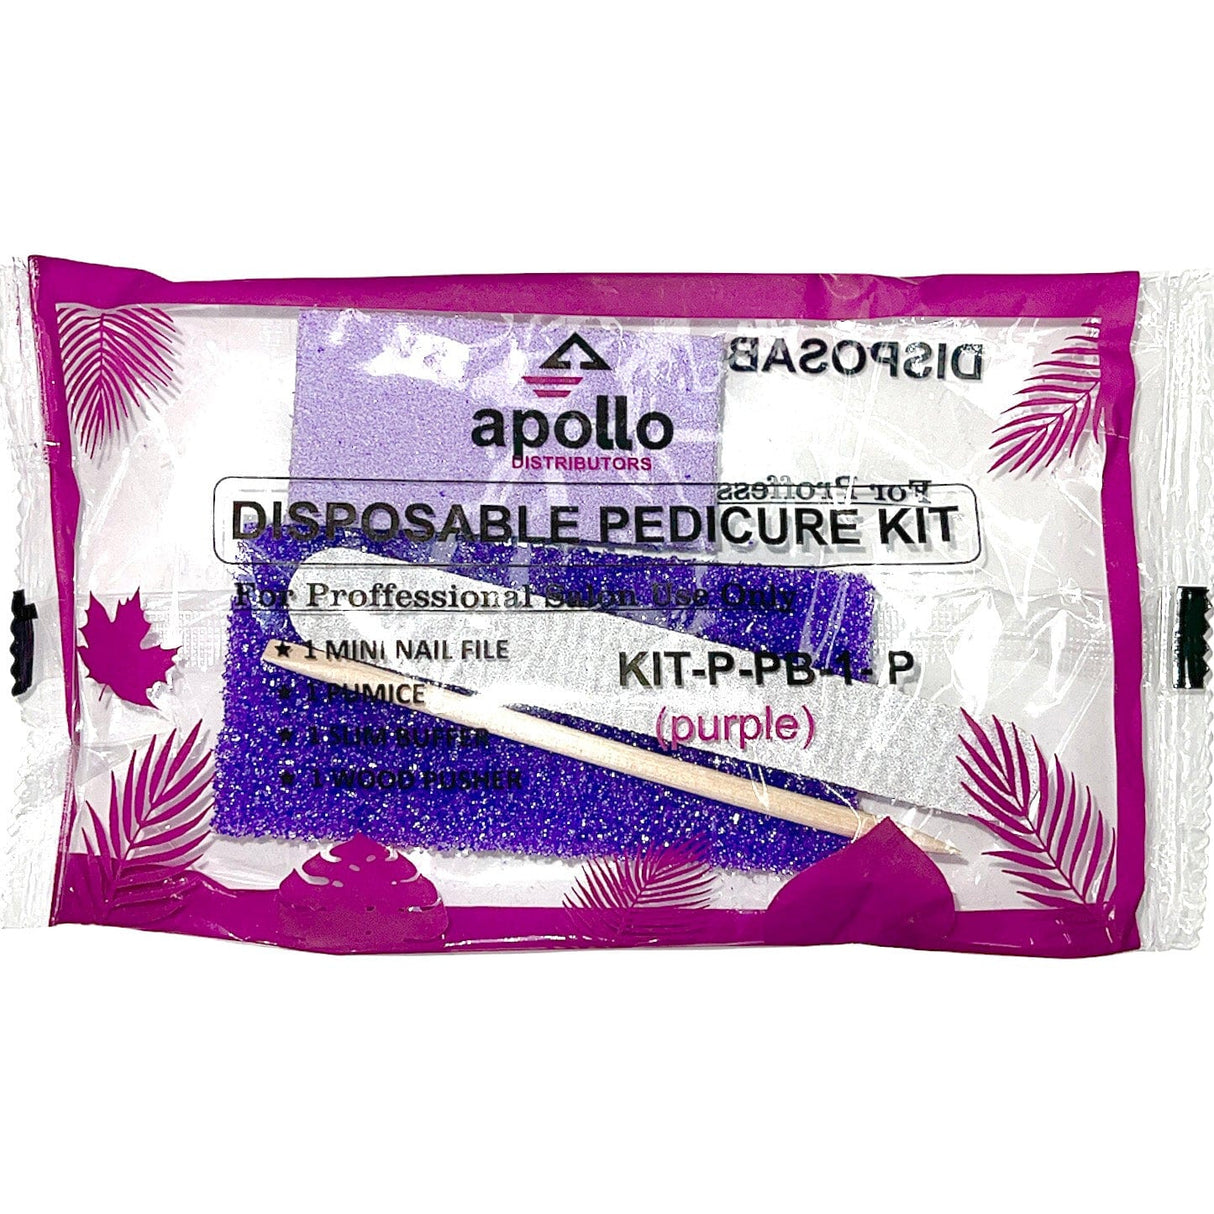 APOLLO Disposable Pedicure Kit